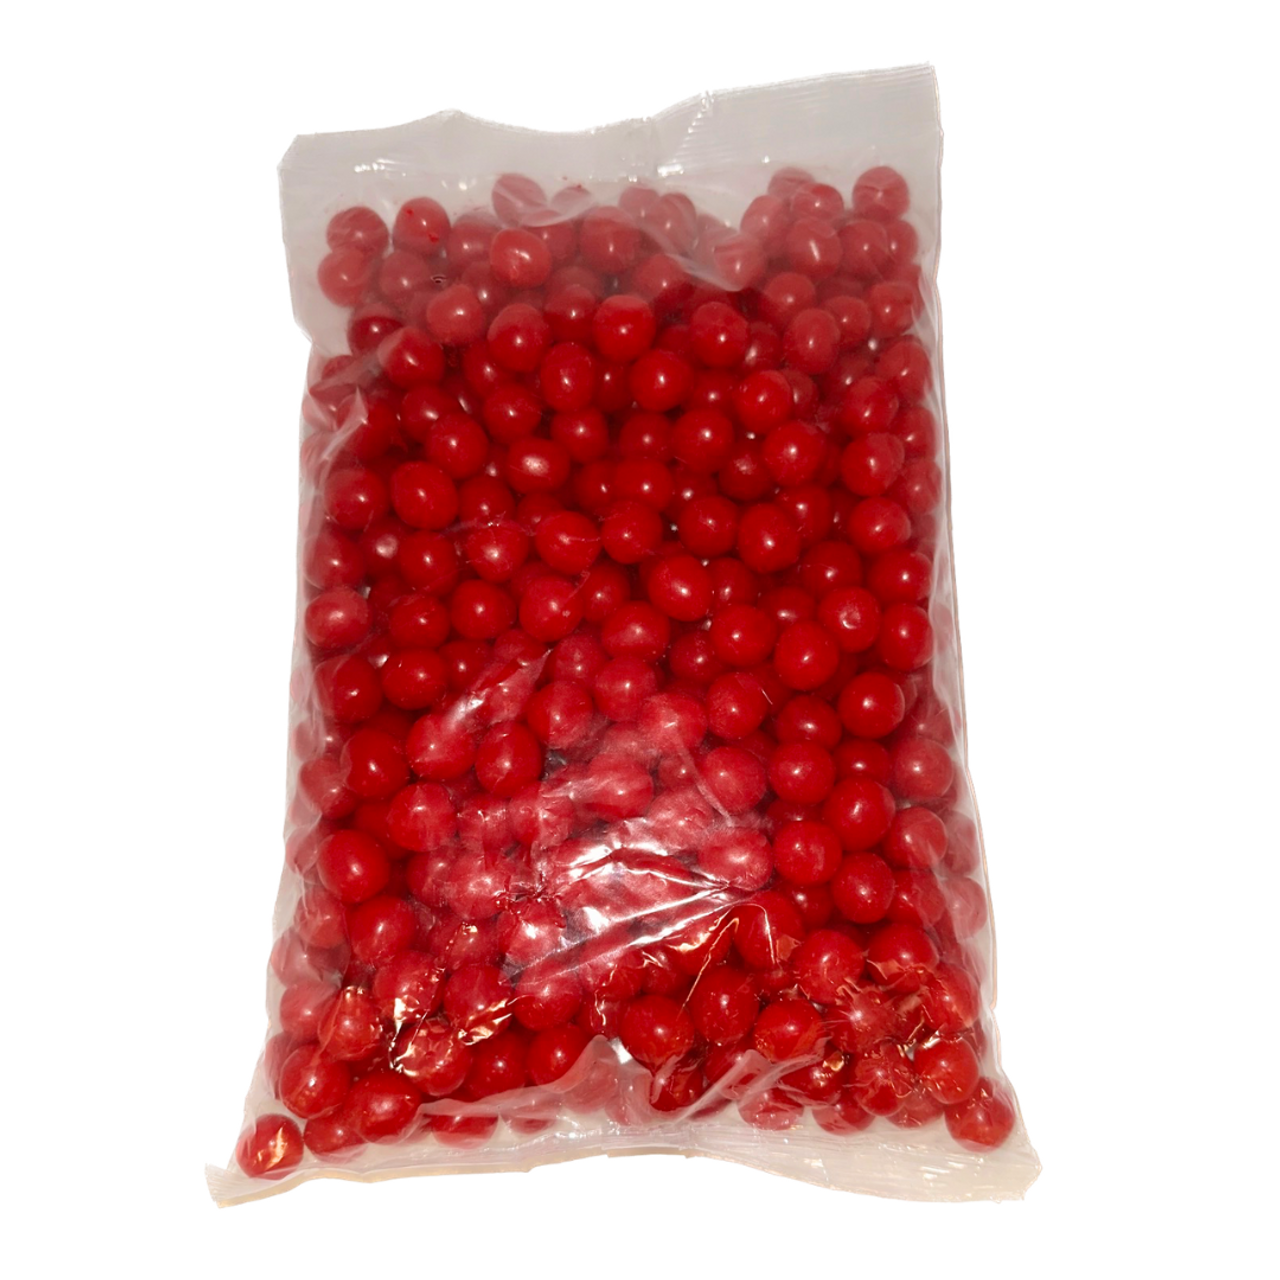 Cherry Republic Sour Candy - Sour Cherry Balls - 2 x 8 Ounce